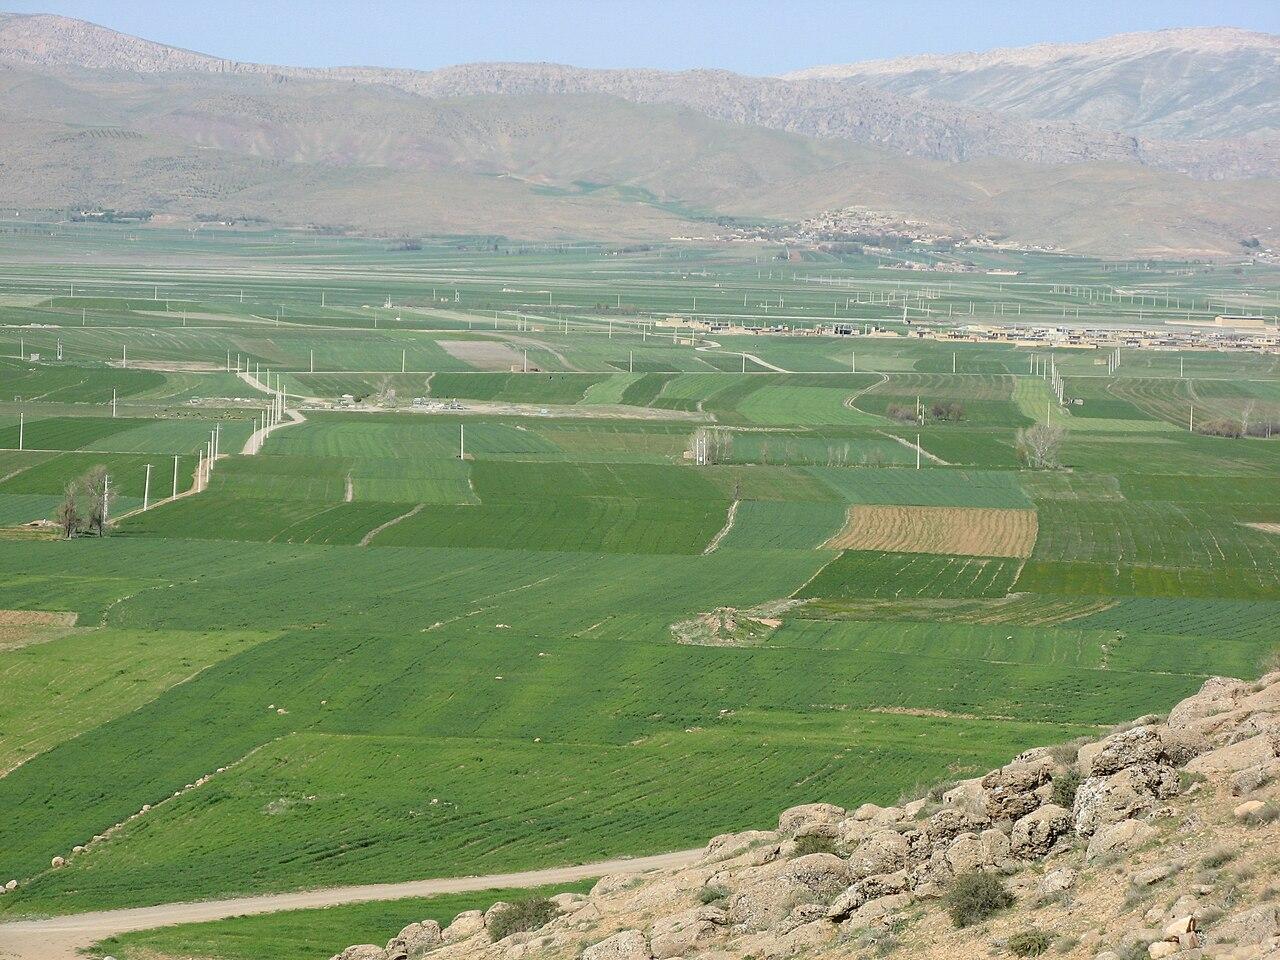 Chaharmahal and Bakhtiari province, Iran